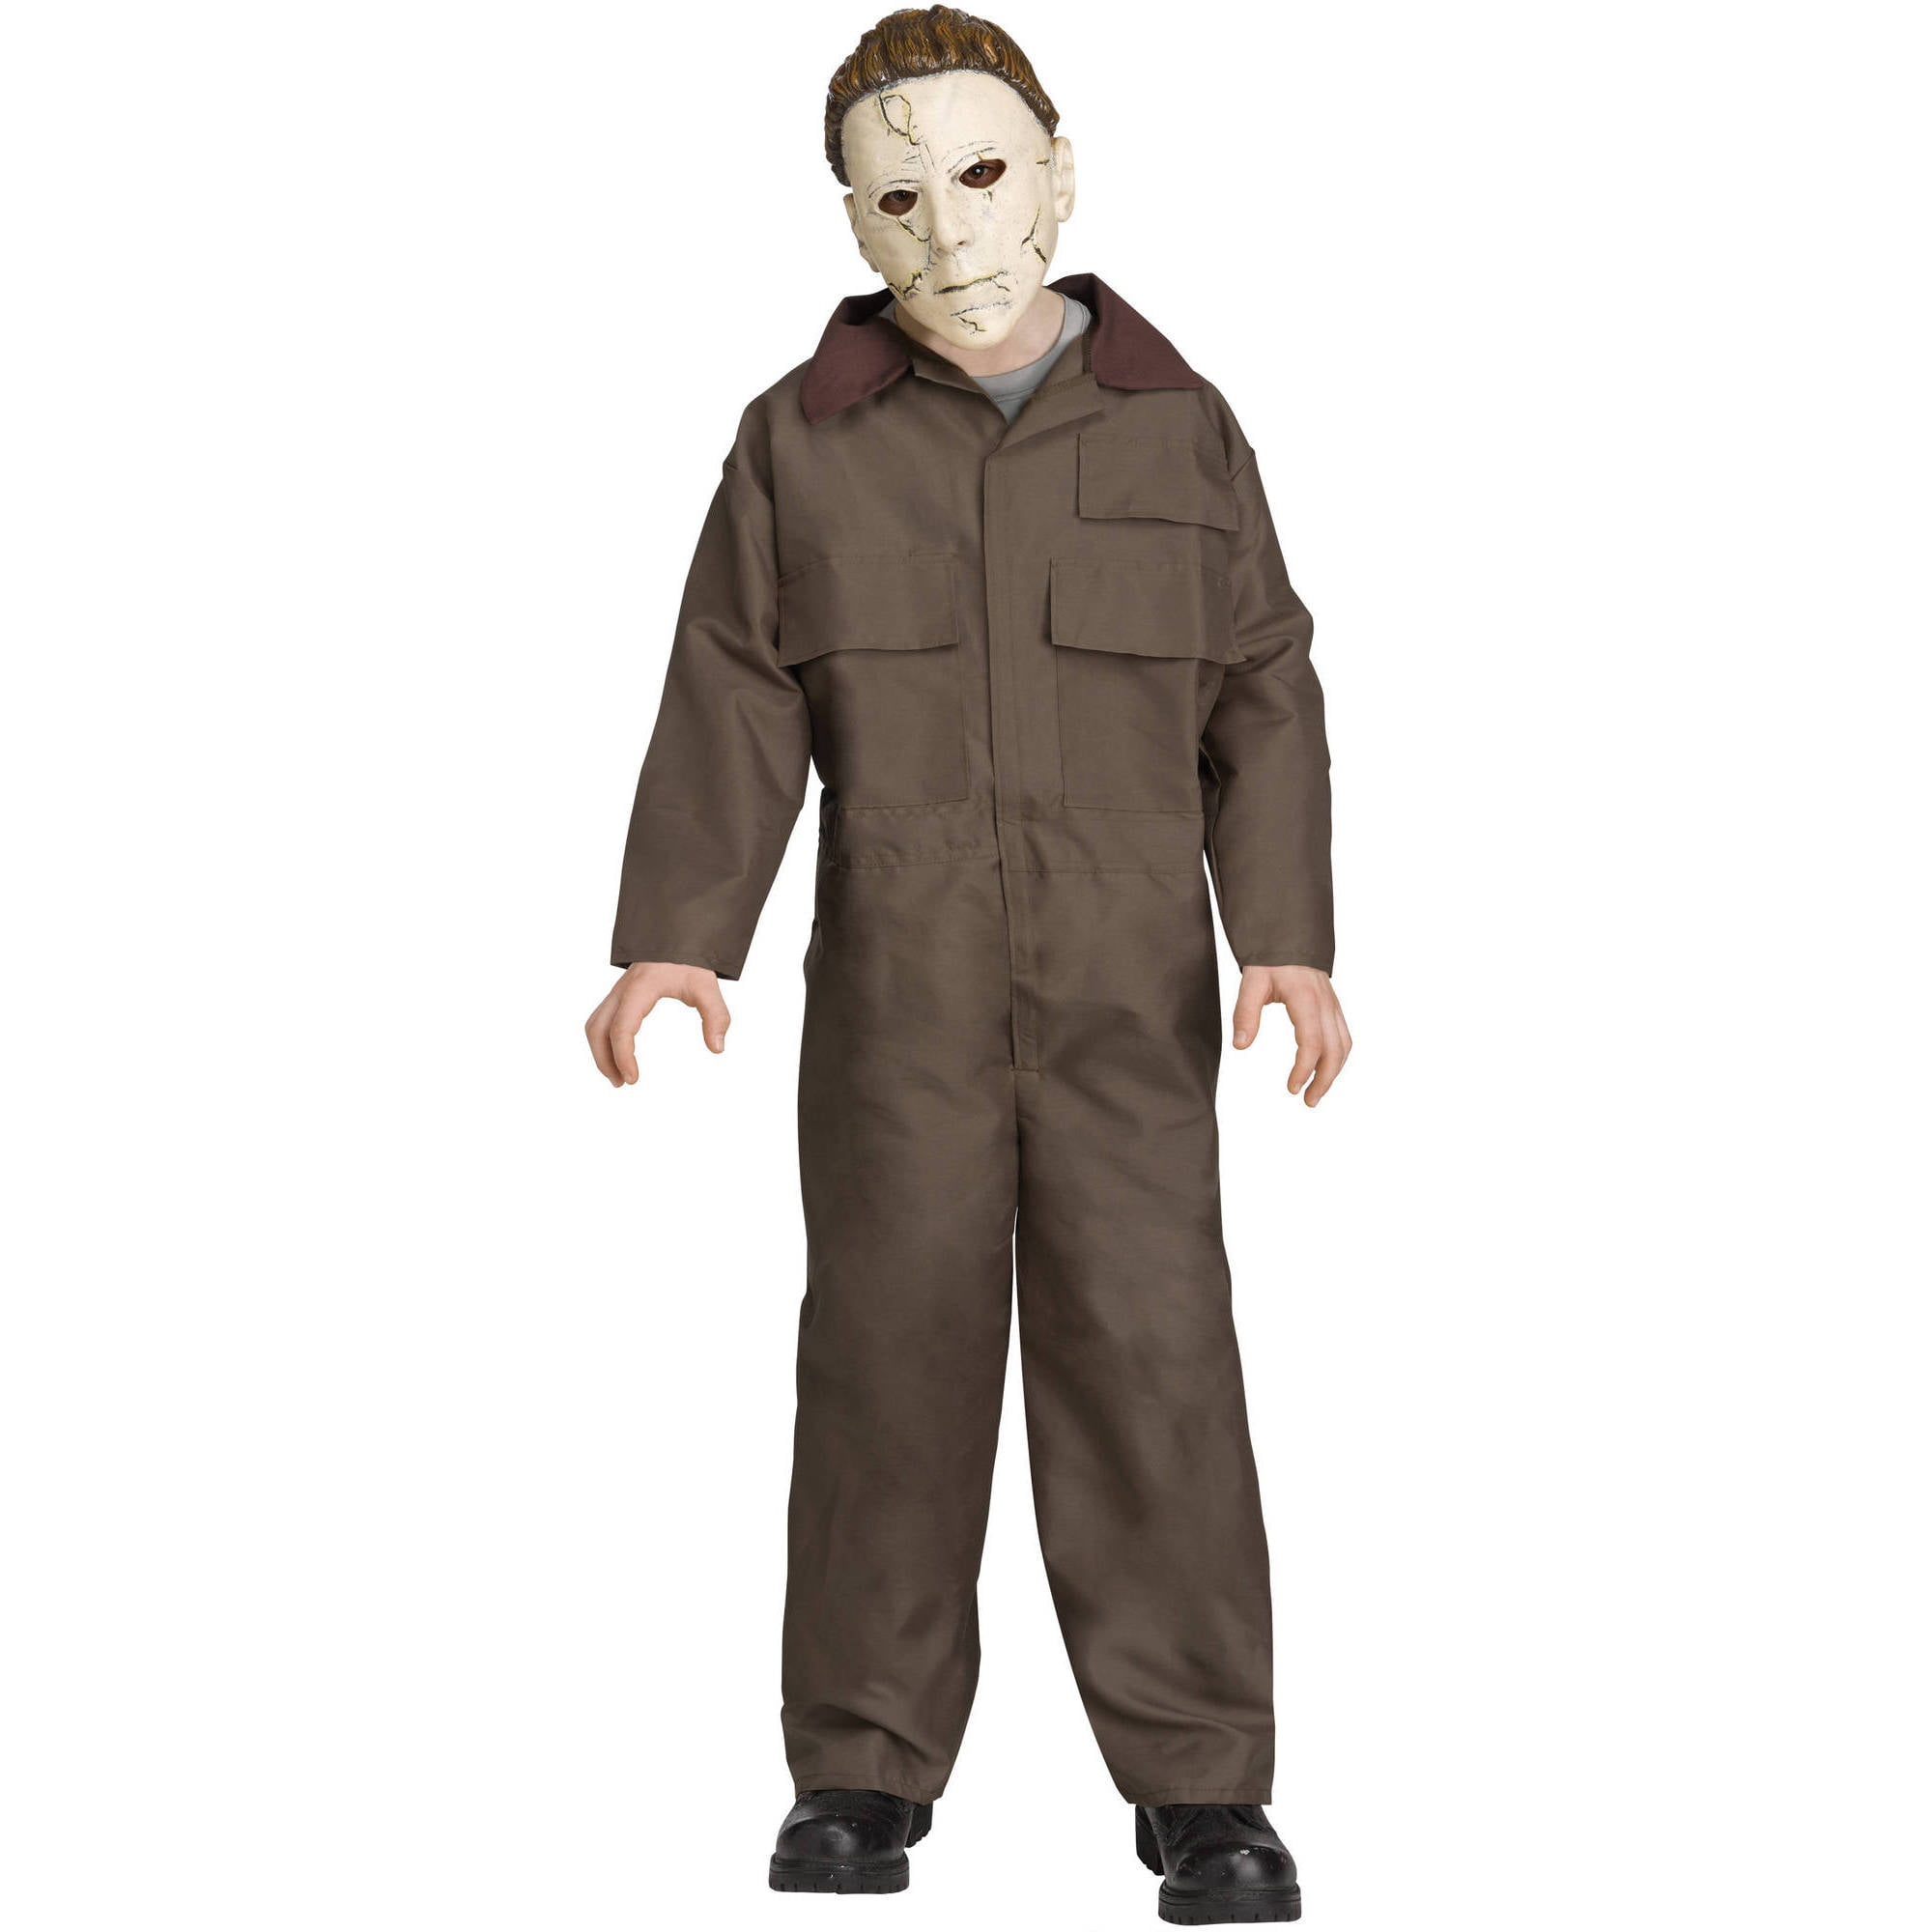 Michael Meyers Child Halloween Costume - Walmart.com